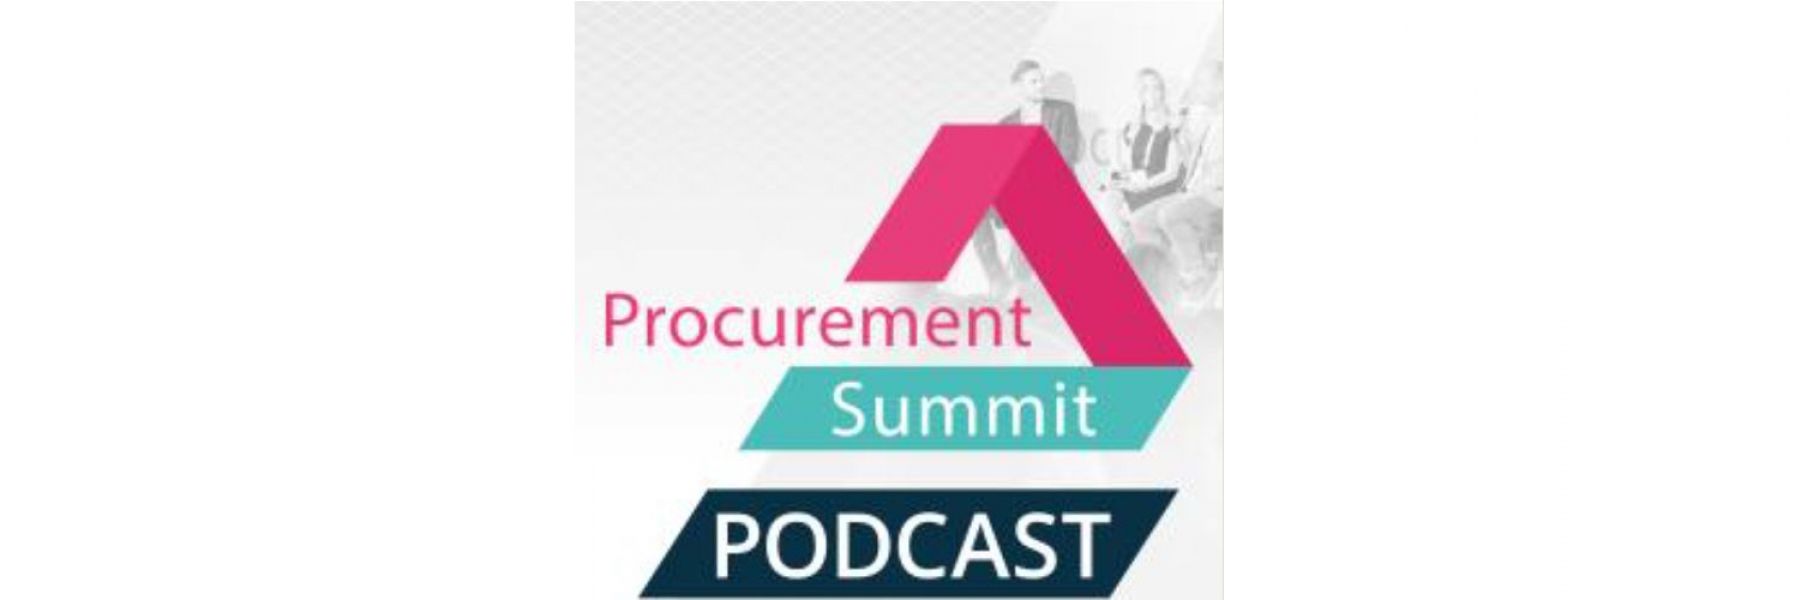 Procurement Summit Podcast